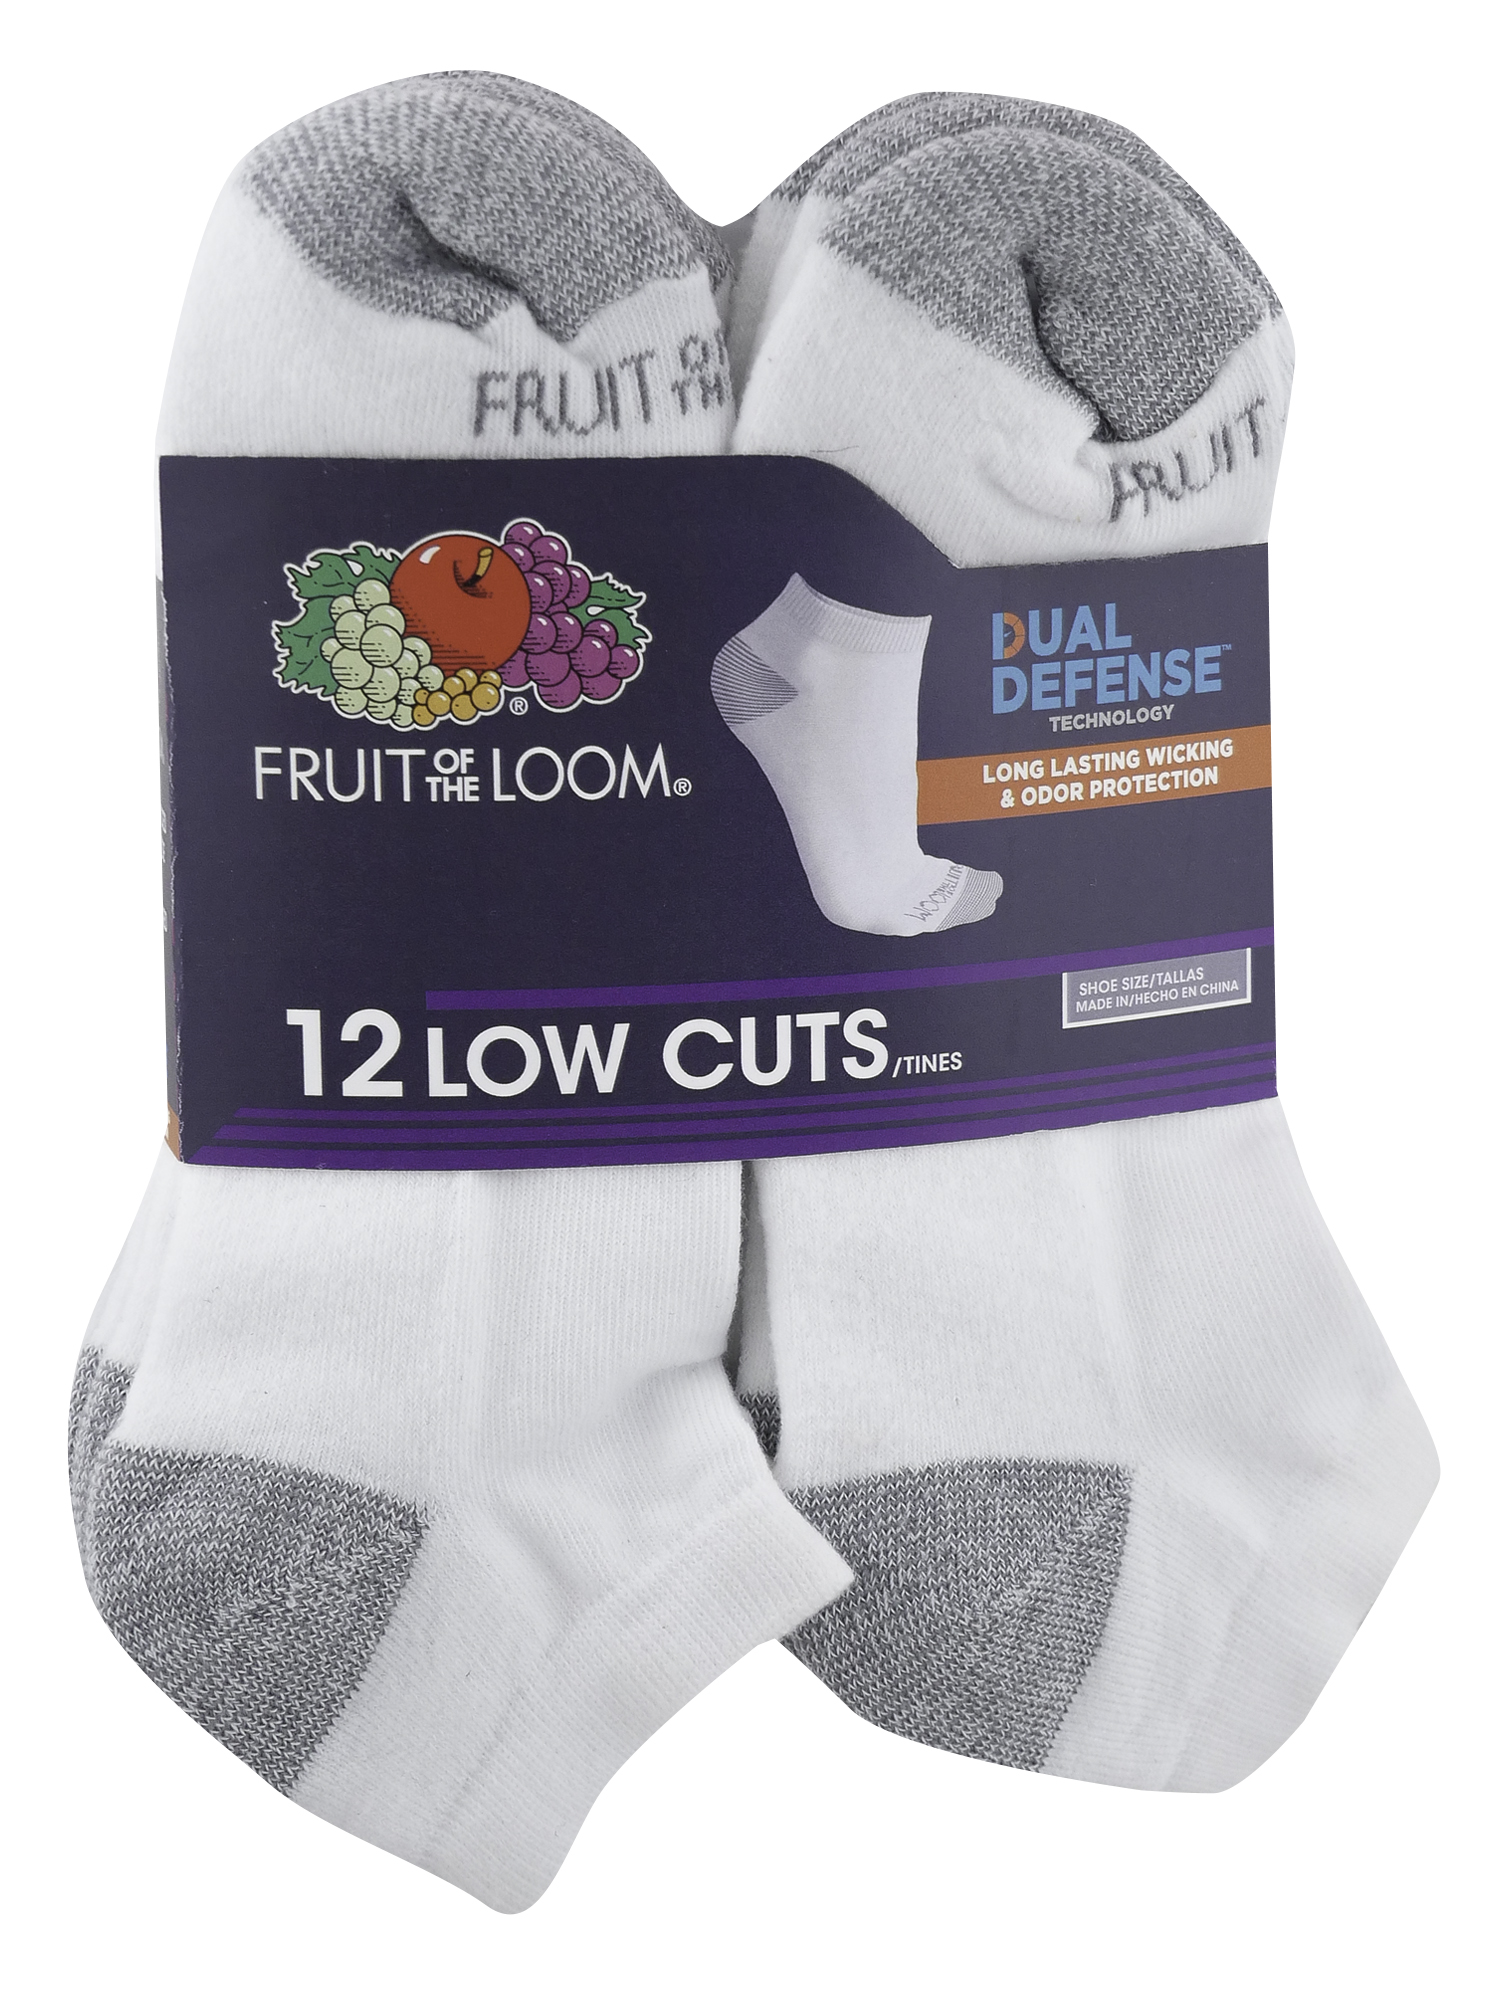 Fruit of the Loom Men's Dual Defense Low Cut Socks, 12 Pack - image 3 of 3